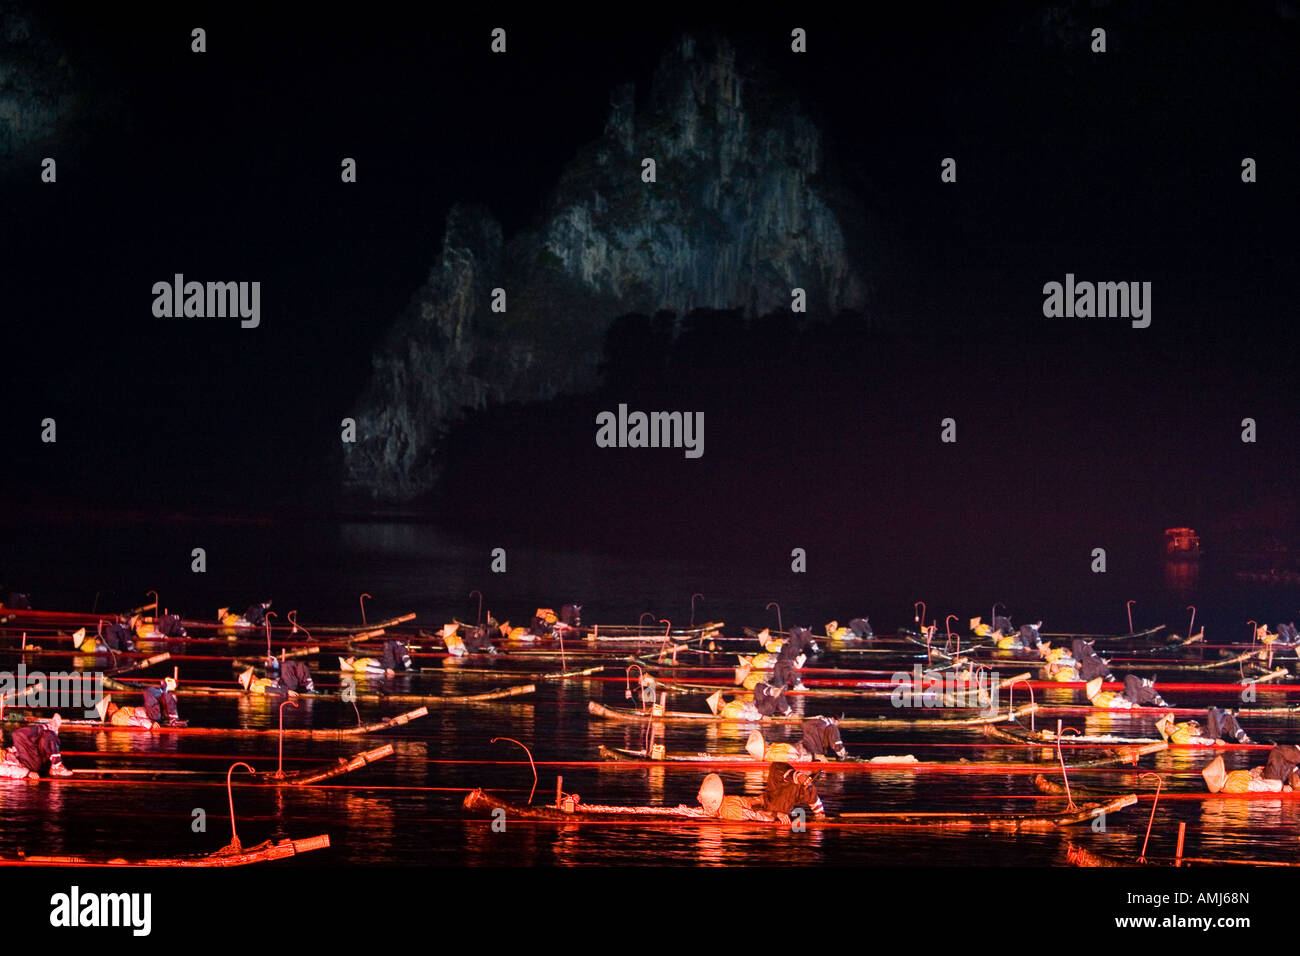 Impression Liu Sanjie Night Light Show Performance on the Li River Yangshuo China Stock Photo